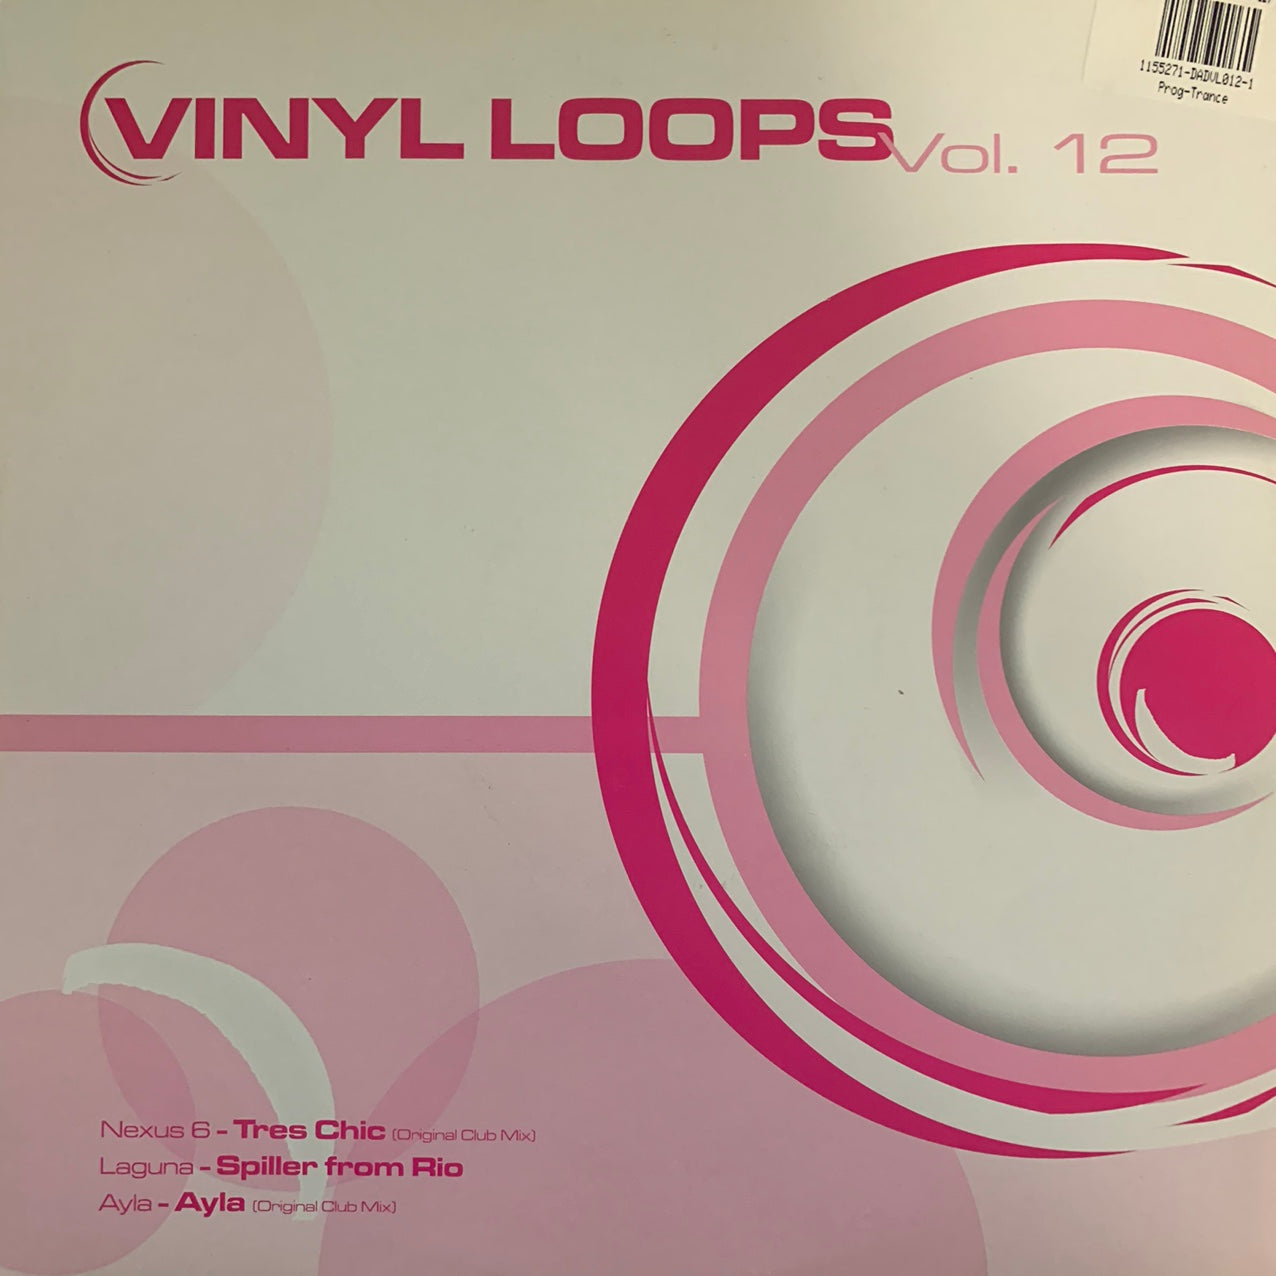 Vinyl Loops Vol 12 Feat Nexus 6, Laguna and Ayala 3 Track 12inch Vinyl